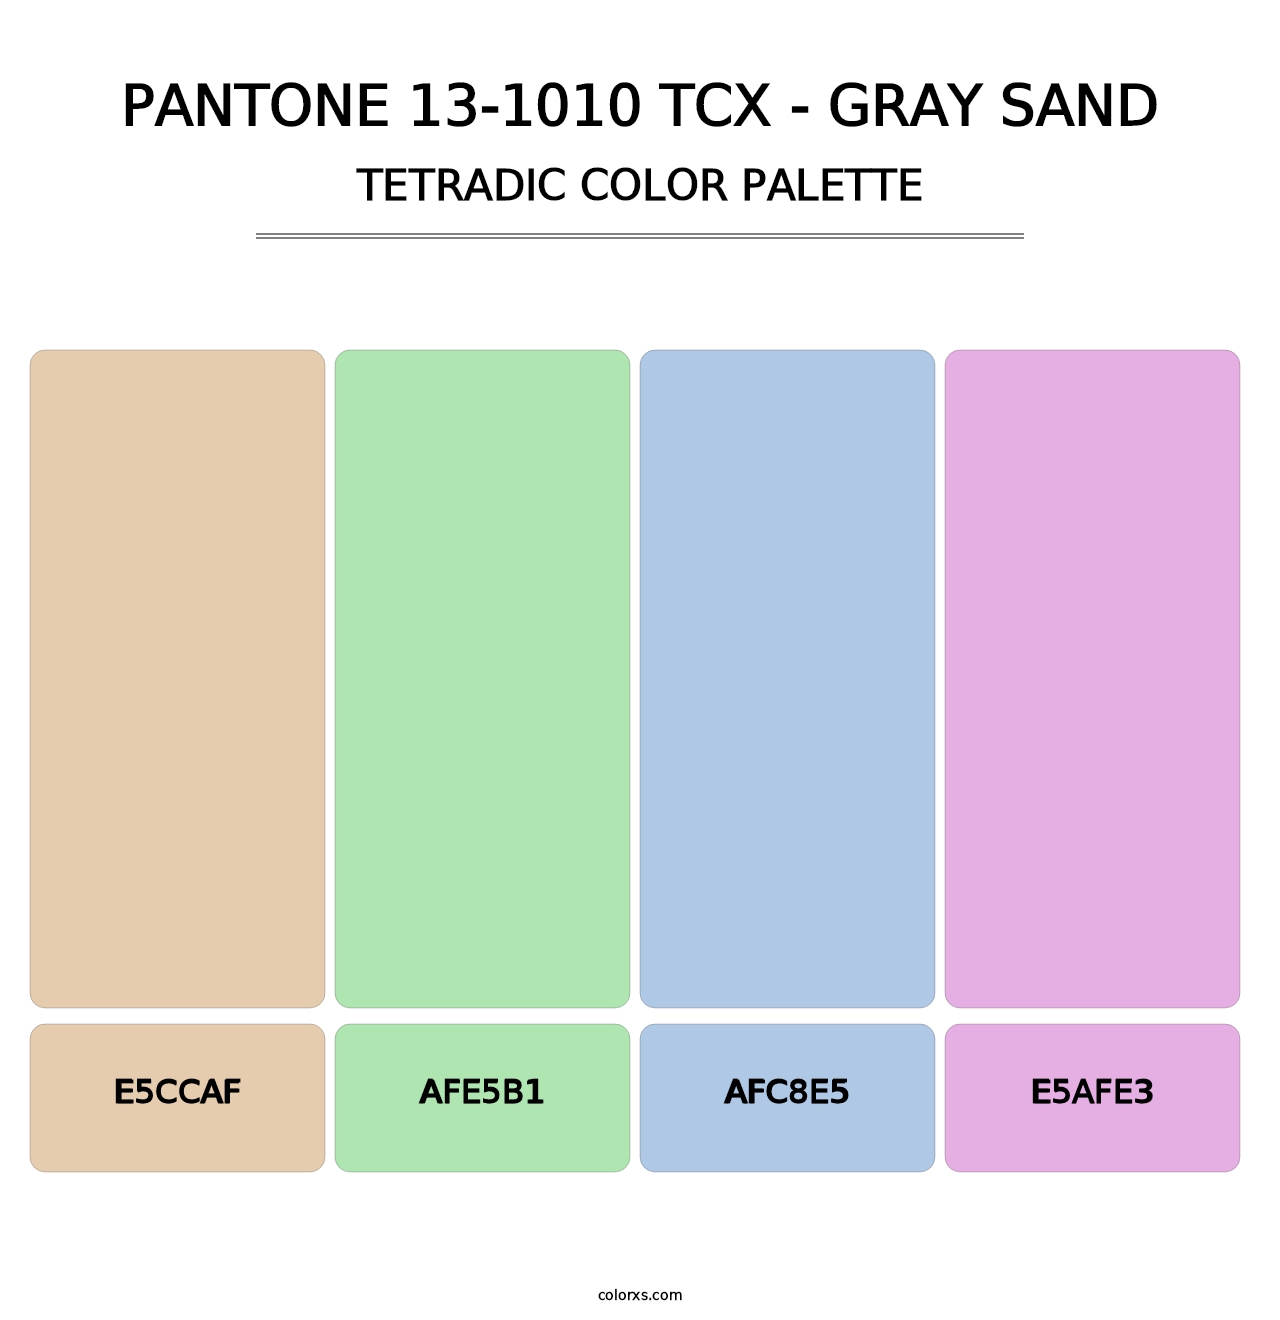 PANTONE 13-1010 TCX - Gray Sand - Tetradic Color Palette